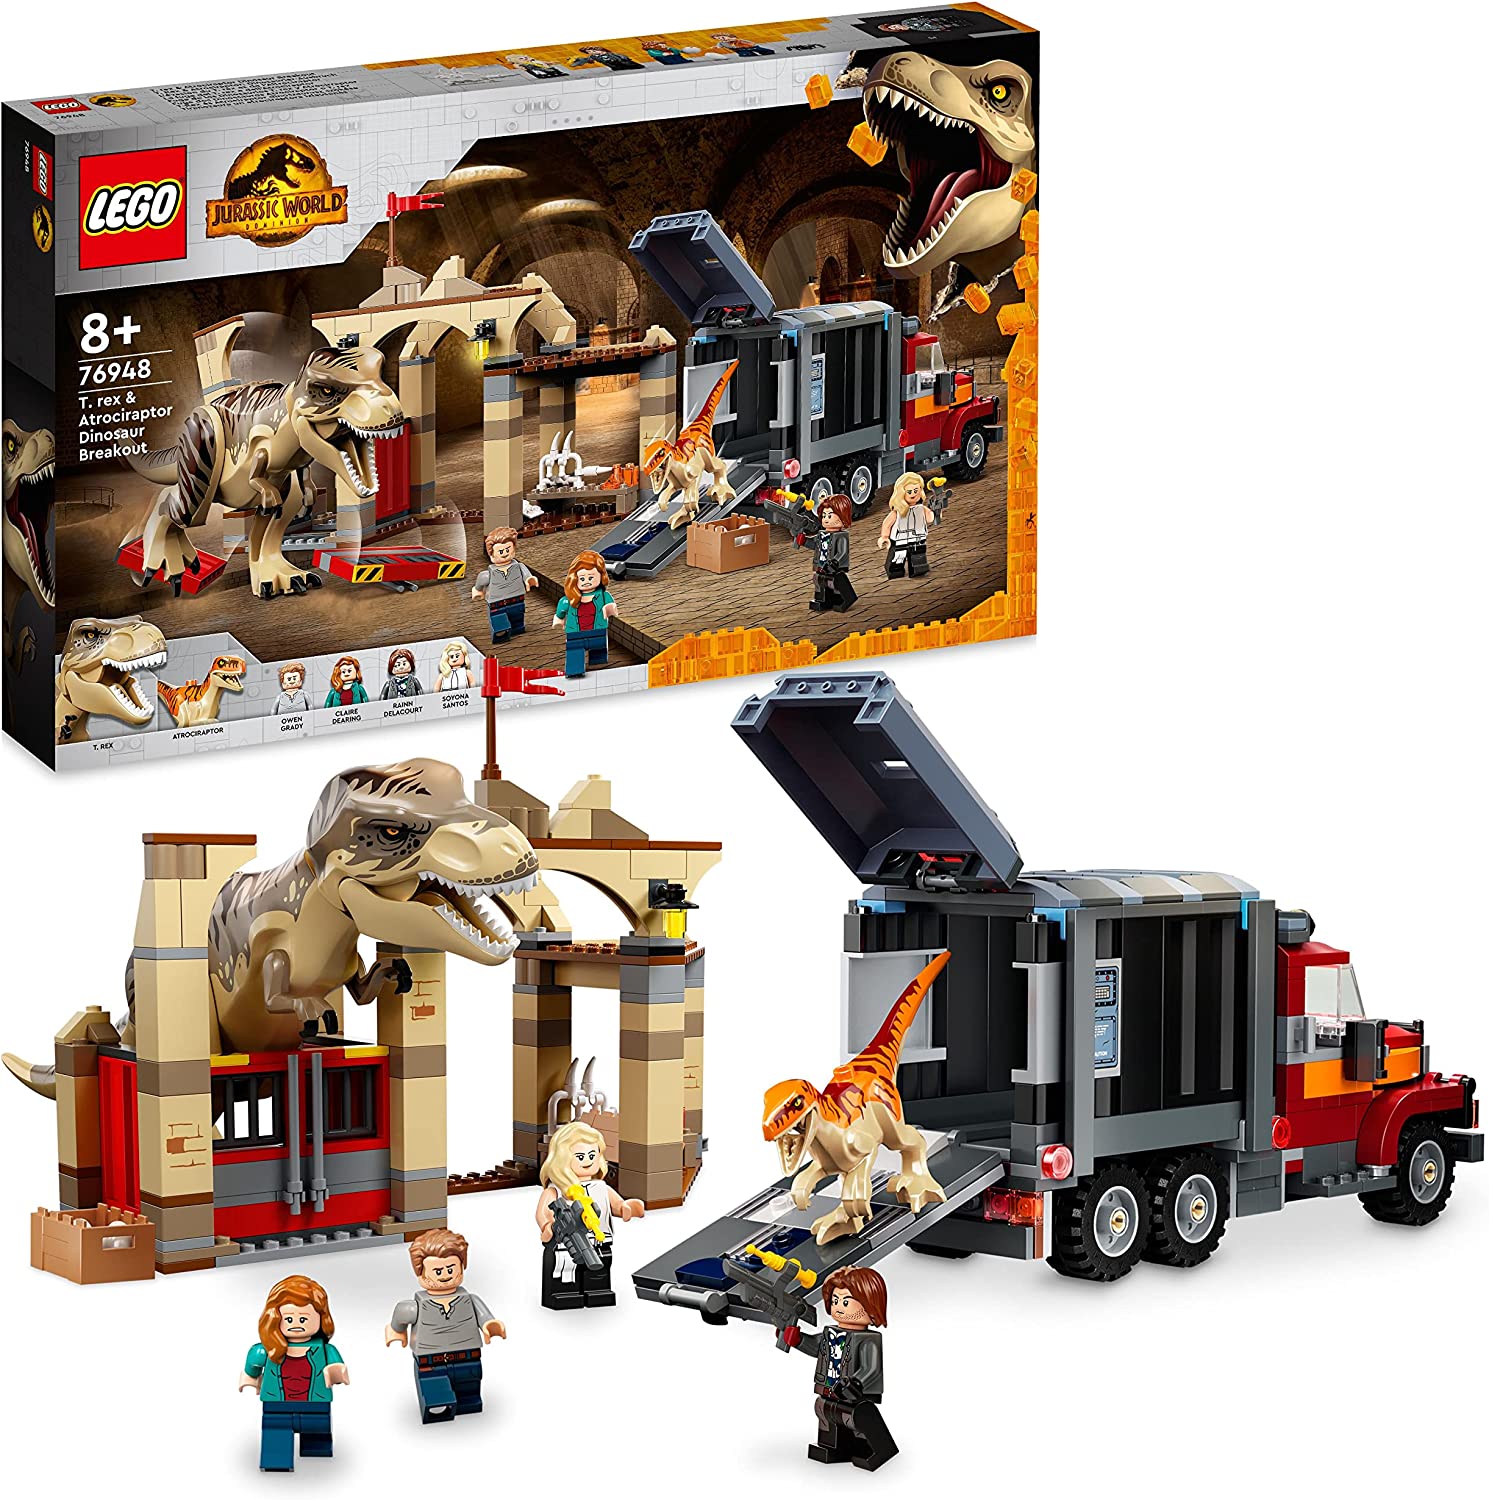 LEGO 76948 Jurassic World T. Rex & Atrociraptor Dinosaur Escape Set with Truck and 4 Minifigures Dinosaur Toy Christmas Gift